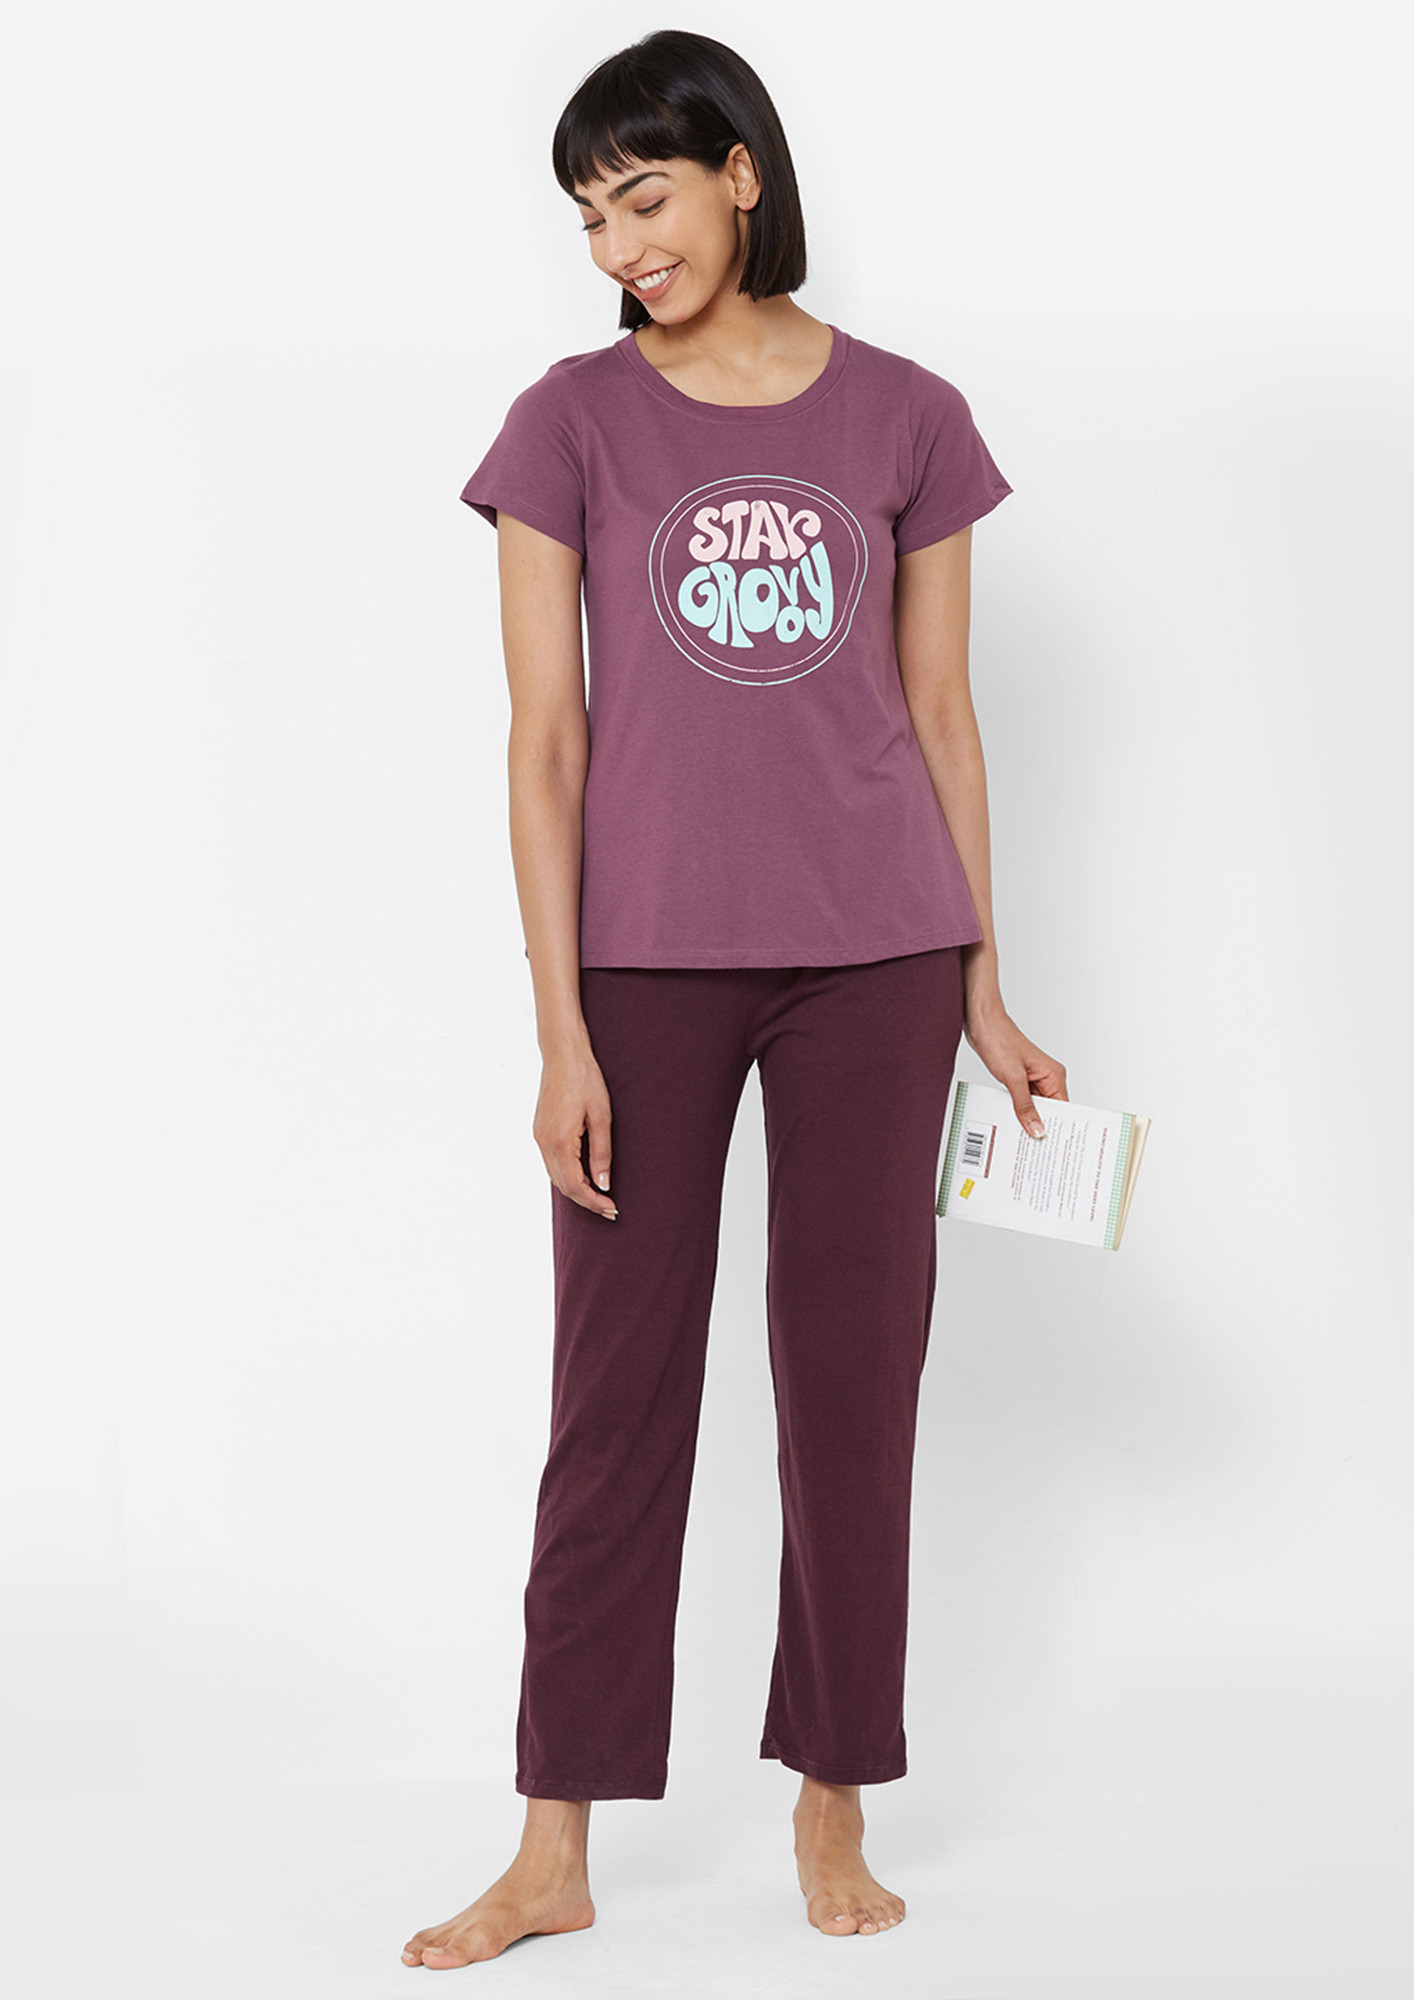 Soie Star Groovy Purple Lounge T-Shirt